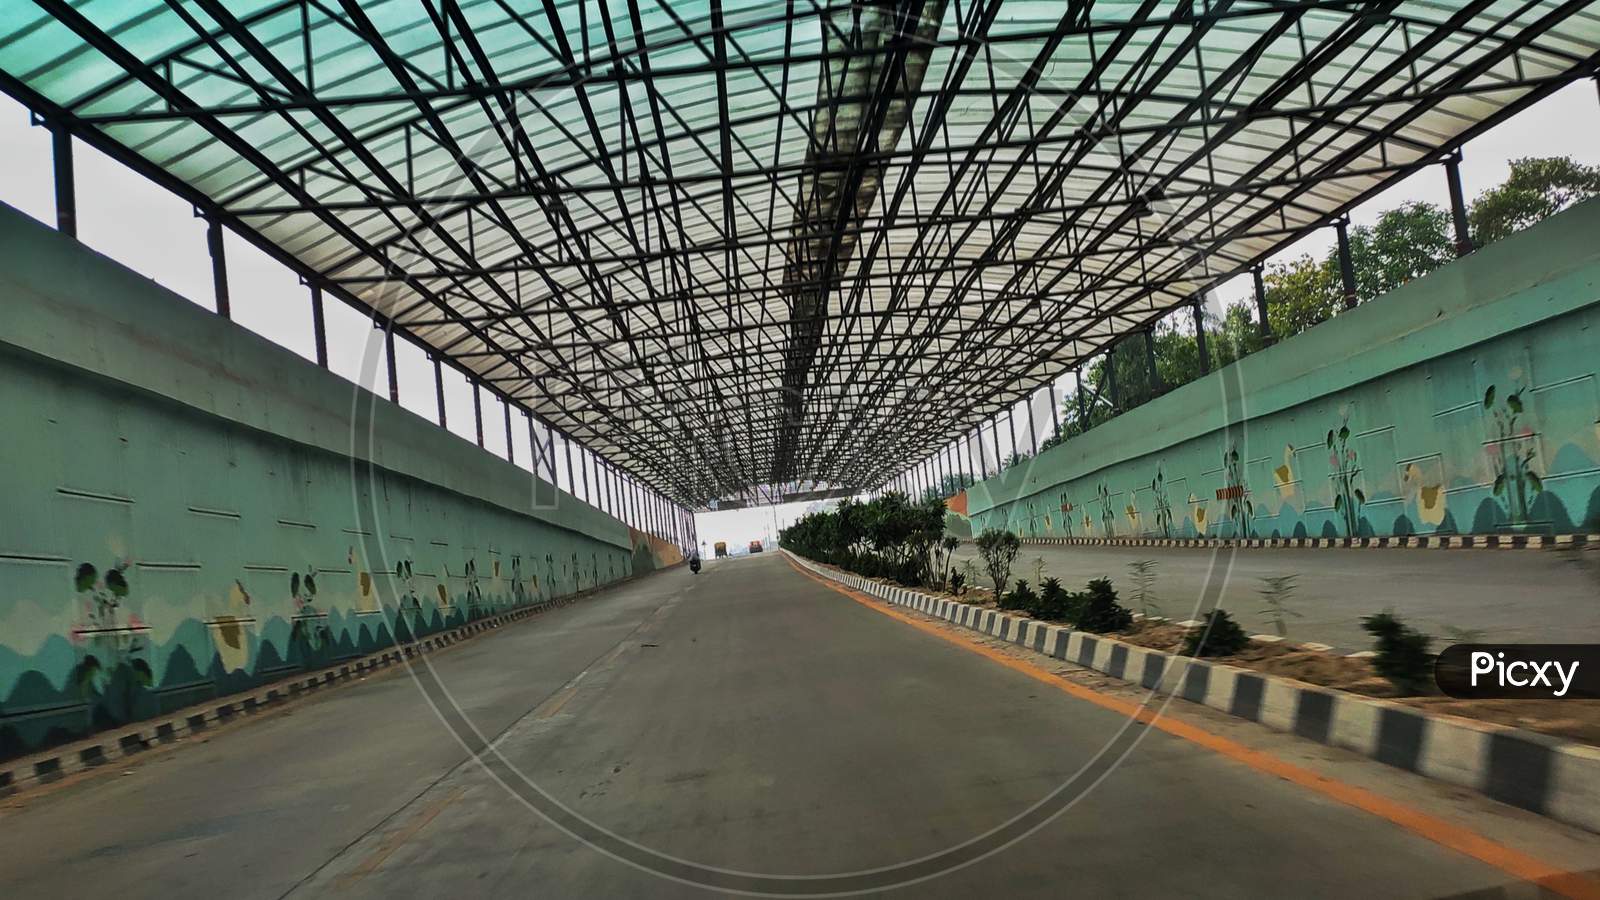 Underpass of Gurgaon,10 Aug 2020